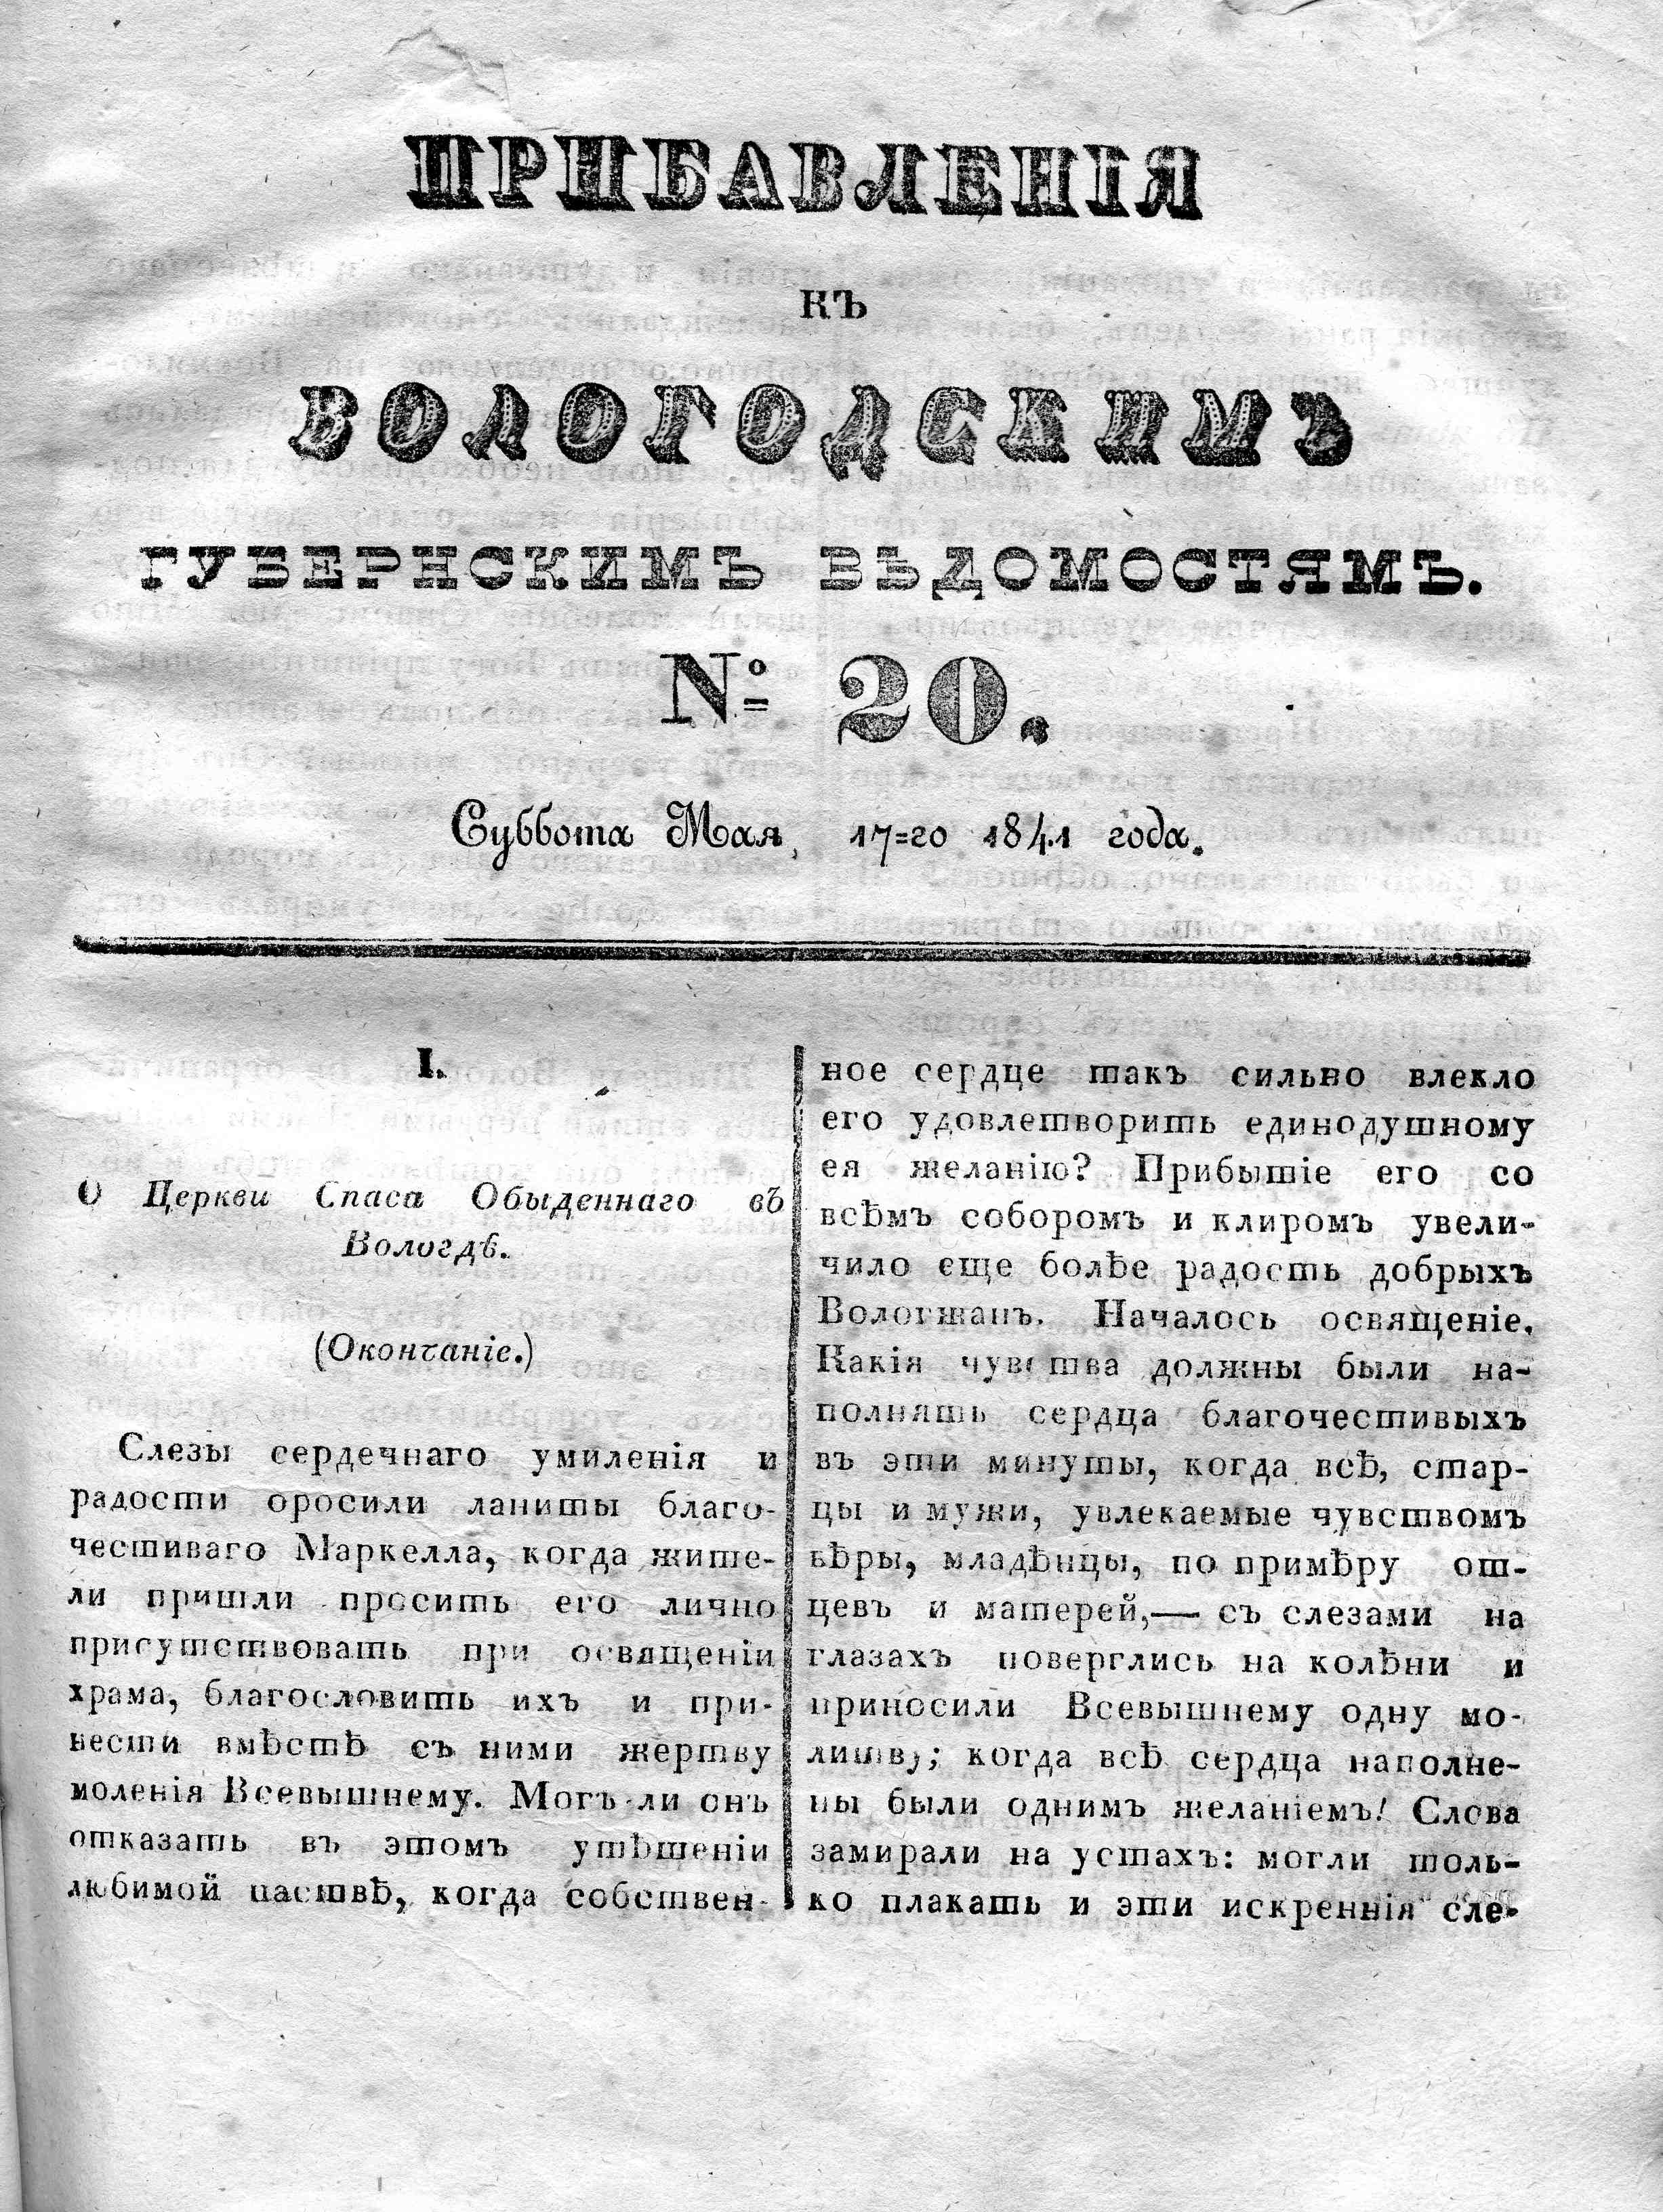 https://www.booksite.ru/vgv/images/1841/20/1841-20-P-125.jpg